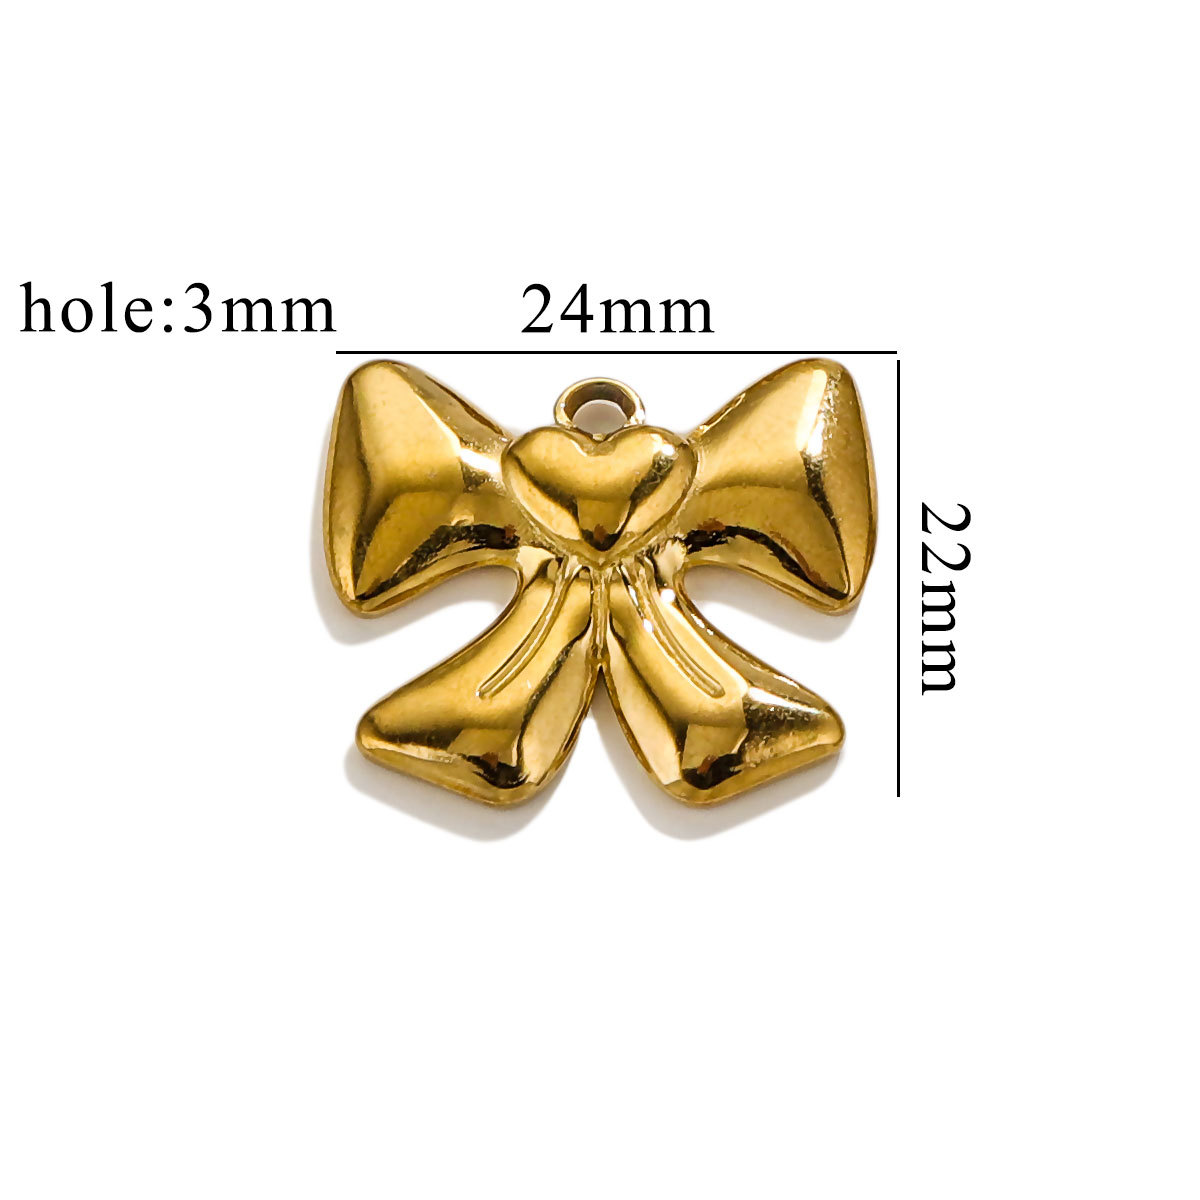 4:Single-hole bow tie